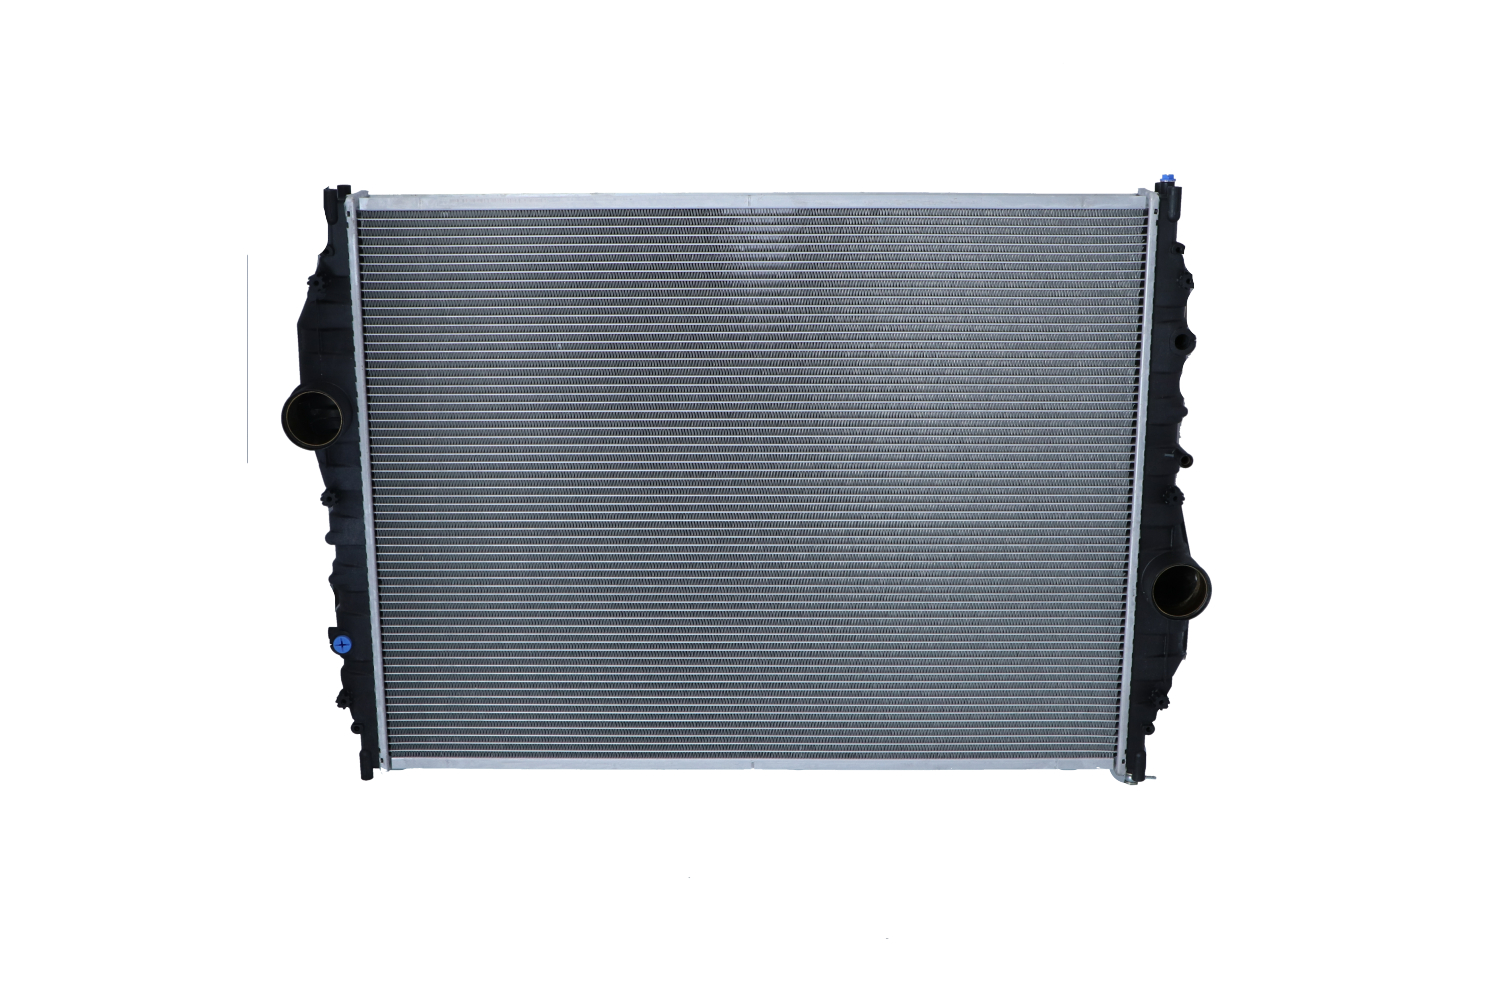 NRF 519889 Engine radiator Aluminium, 880 x 688 x 56 mm, without frame, Brazed cooling fins